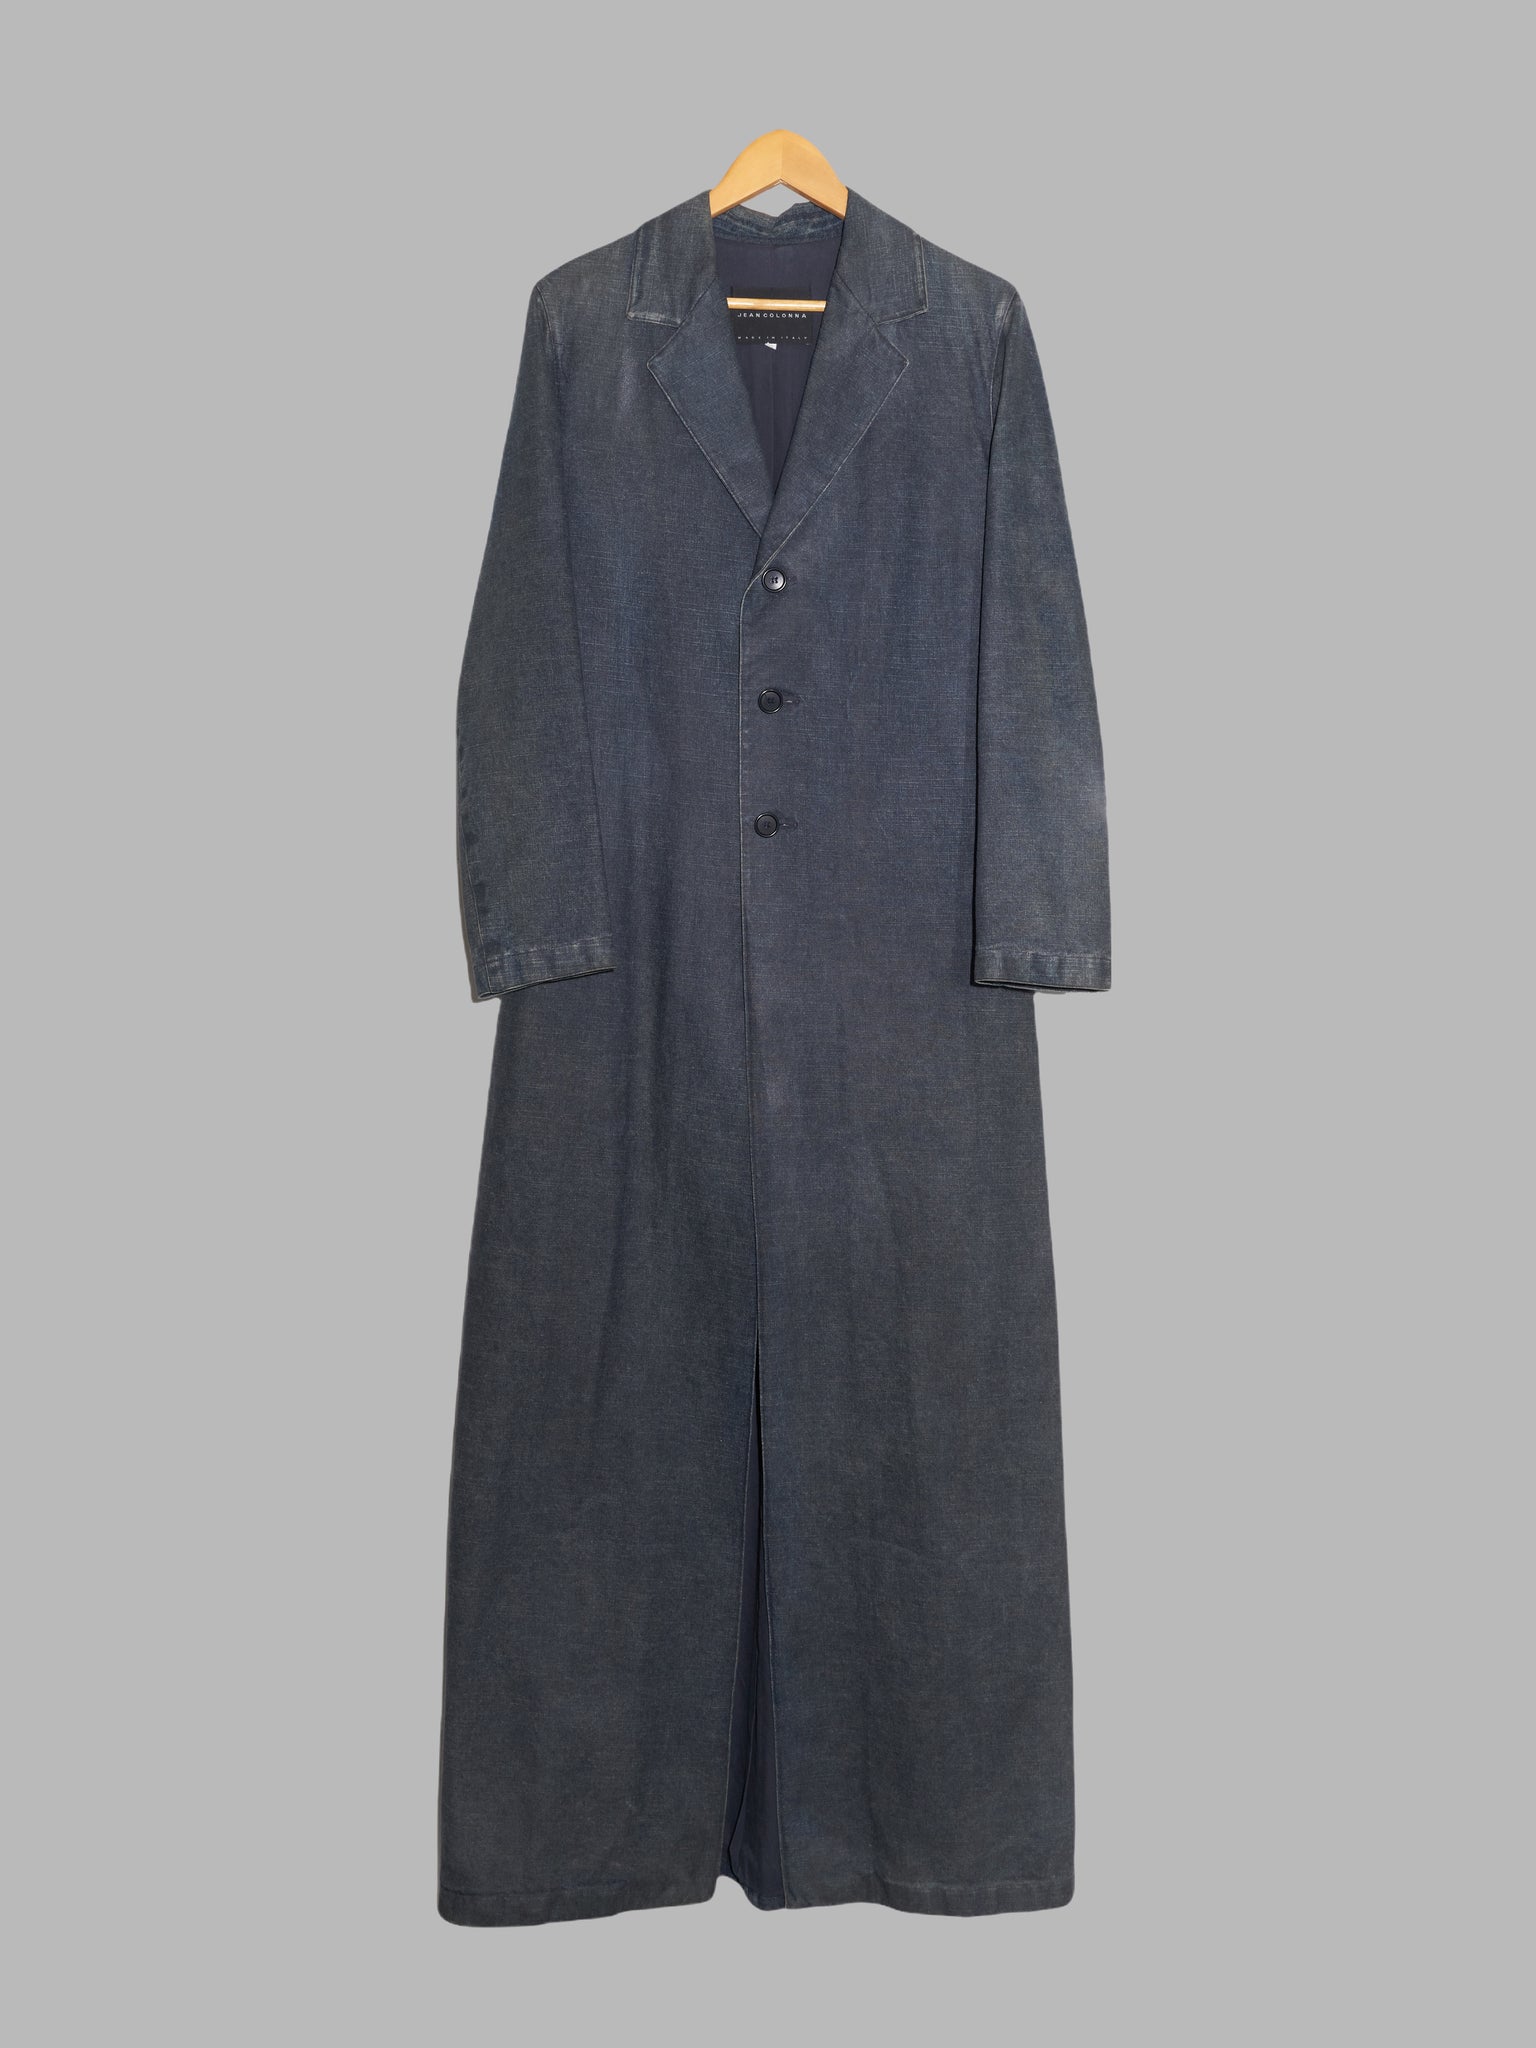 Jean Colonna grey coated cotton full length denim coat - size 42